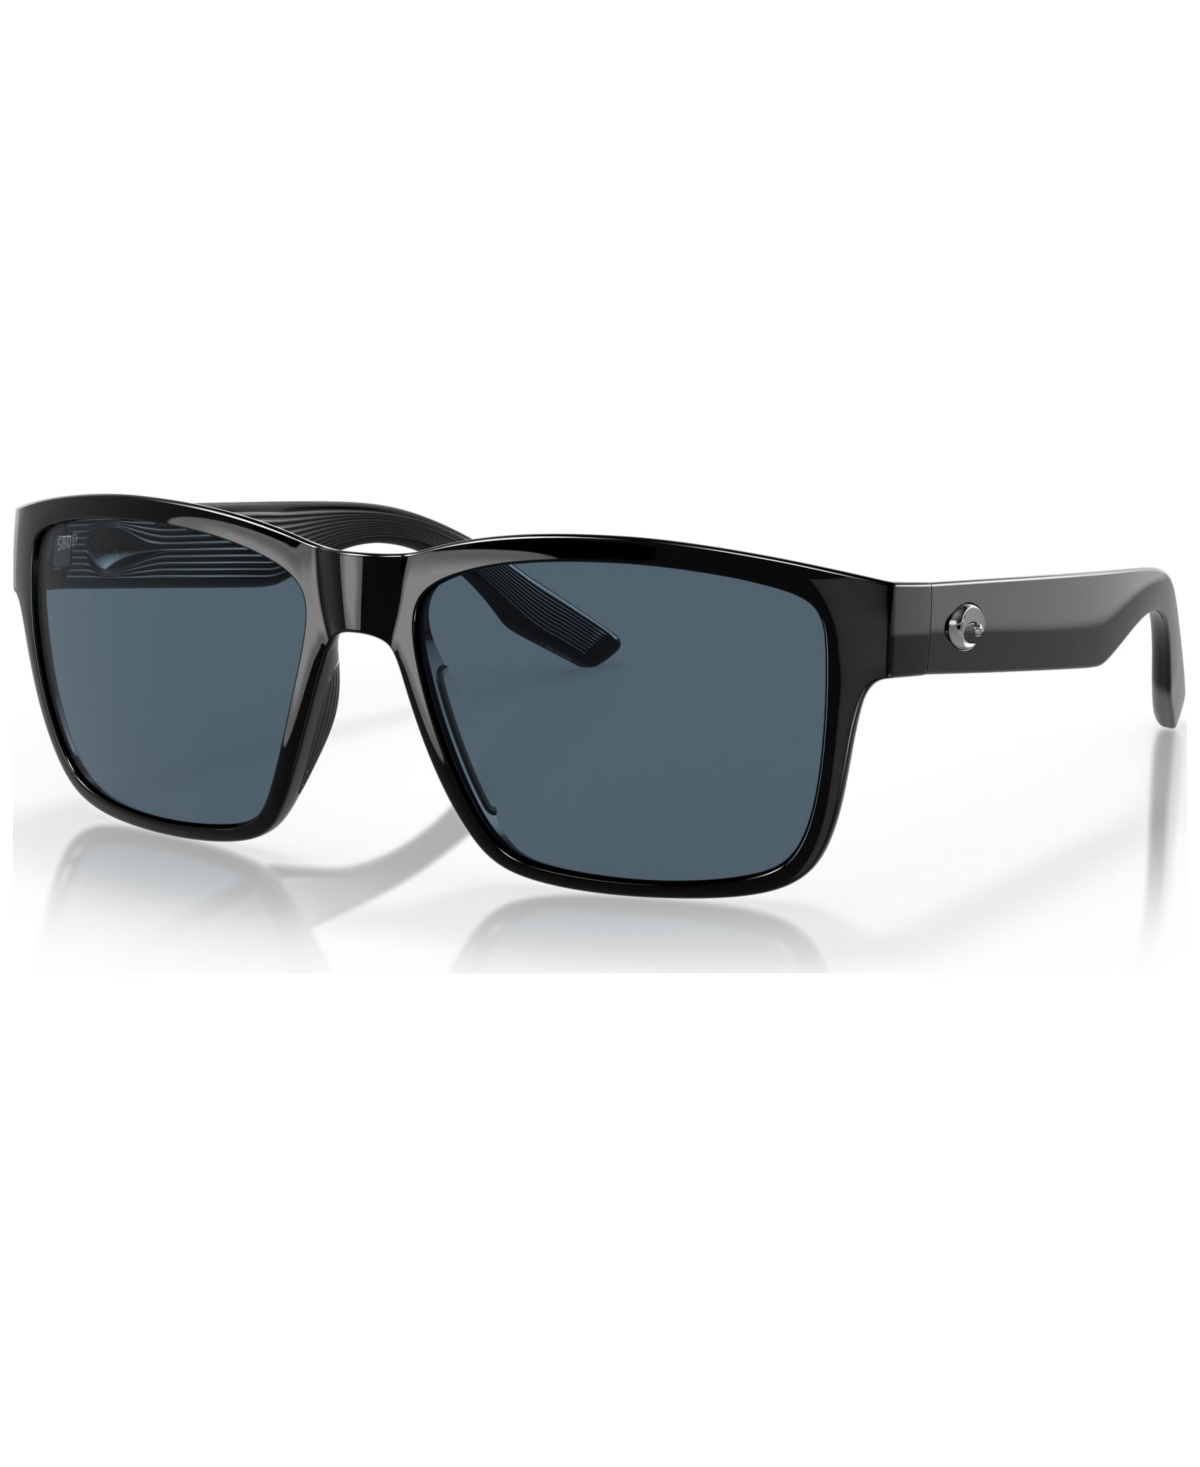 Men's Paunch Polarized Sunglasses, Polar 6S9049 - Black